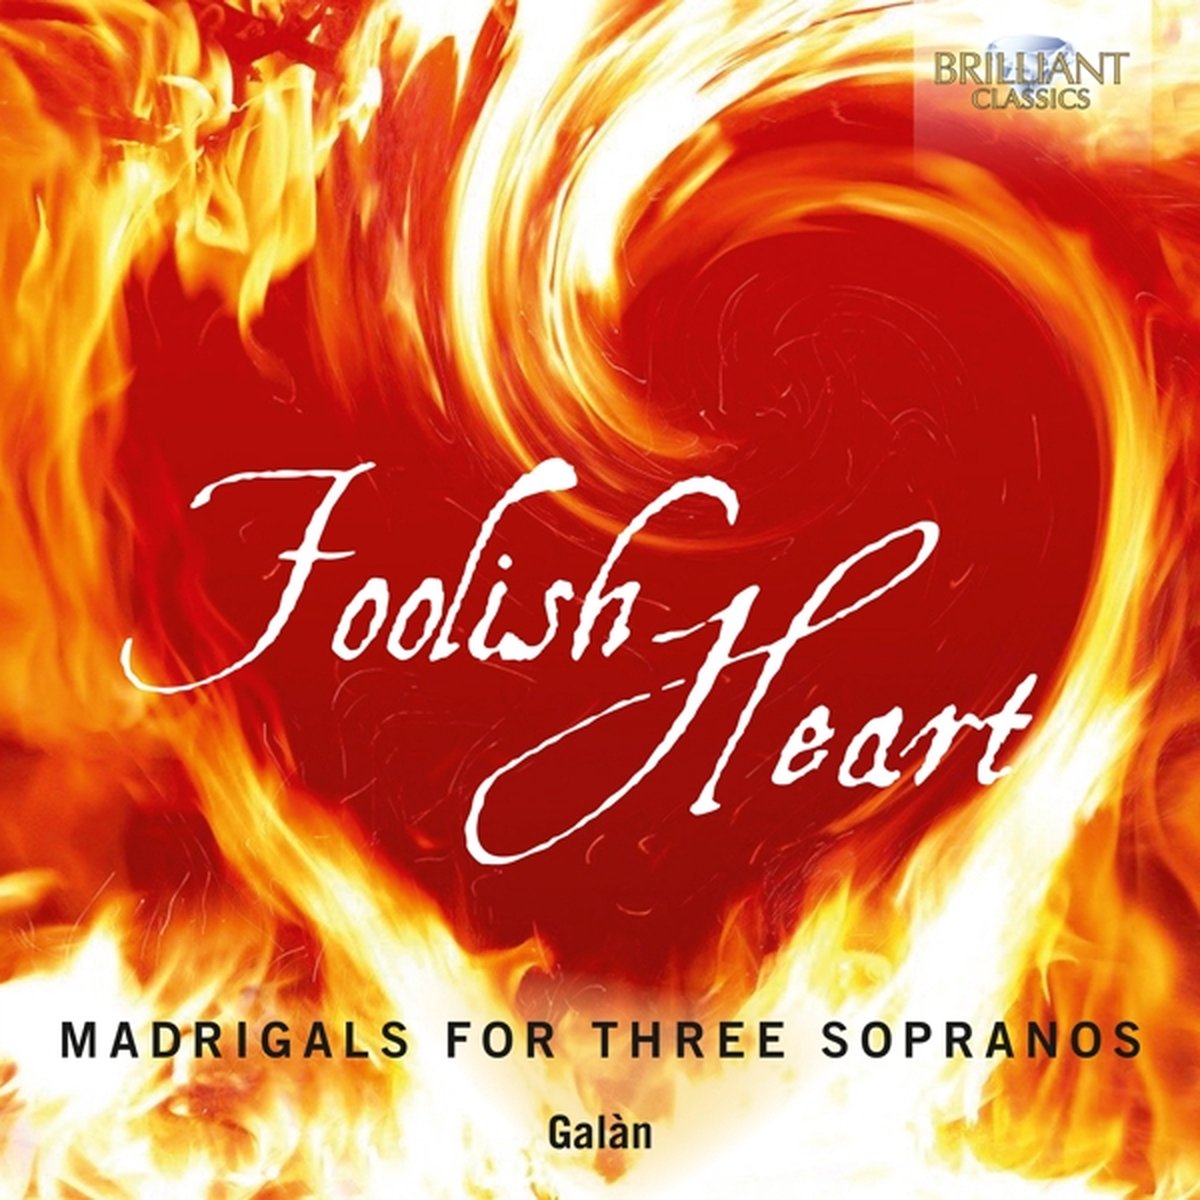 Galàn - Foolish Heart: Madrigals For Three Sopranos (CD)